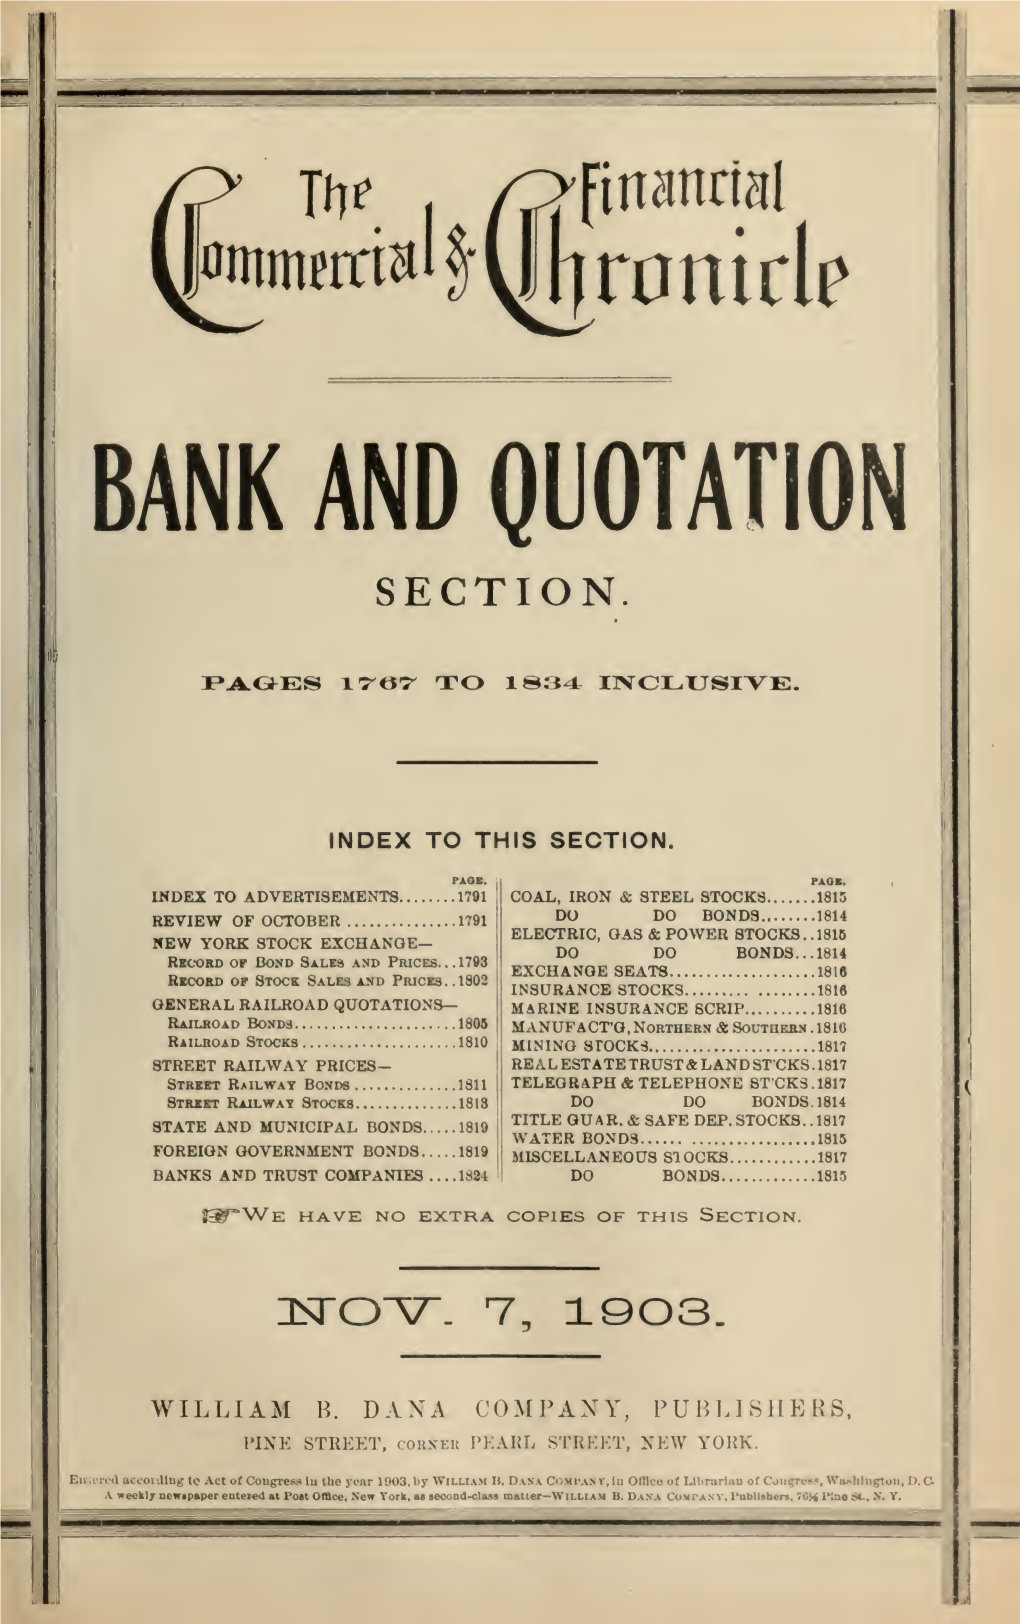 November 7, 1903: Bank and Quotation Section, Vol. 77, No. 2002